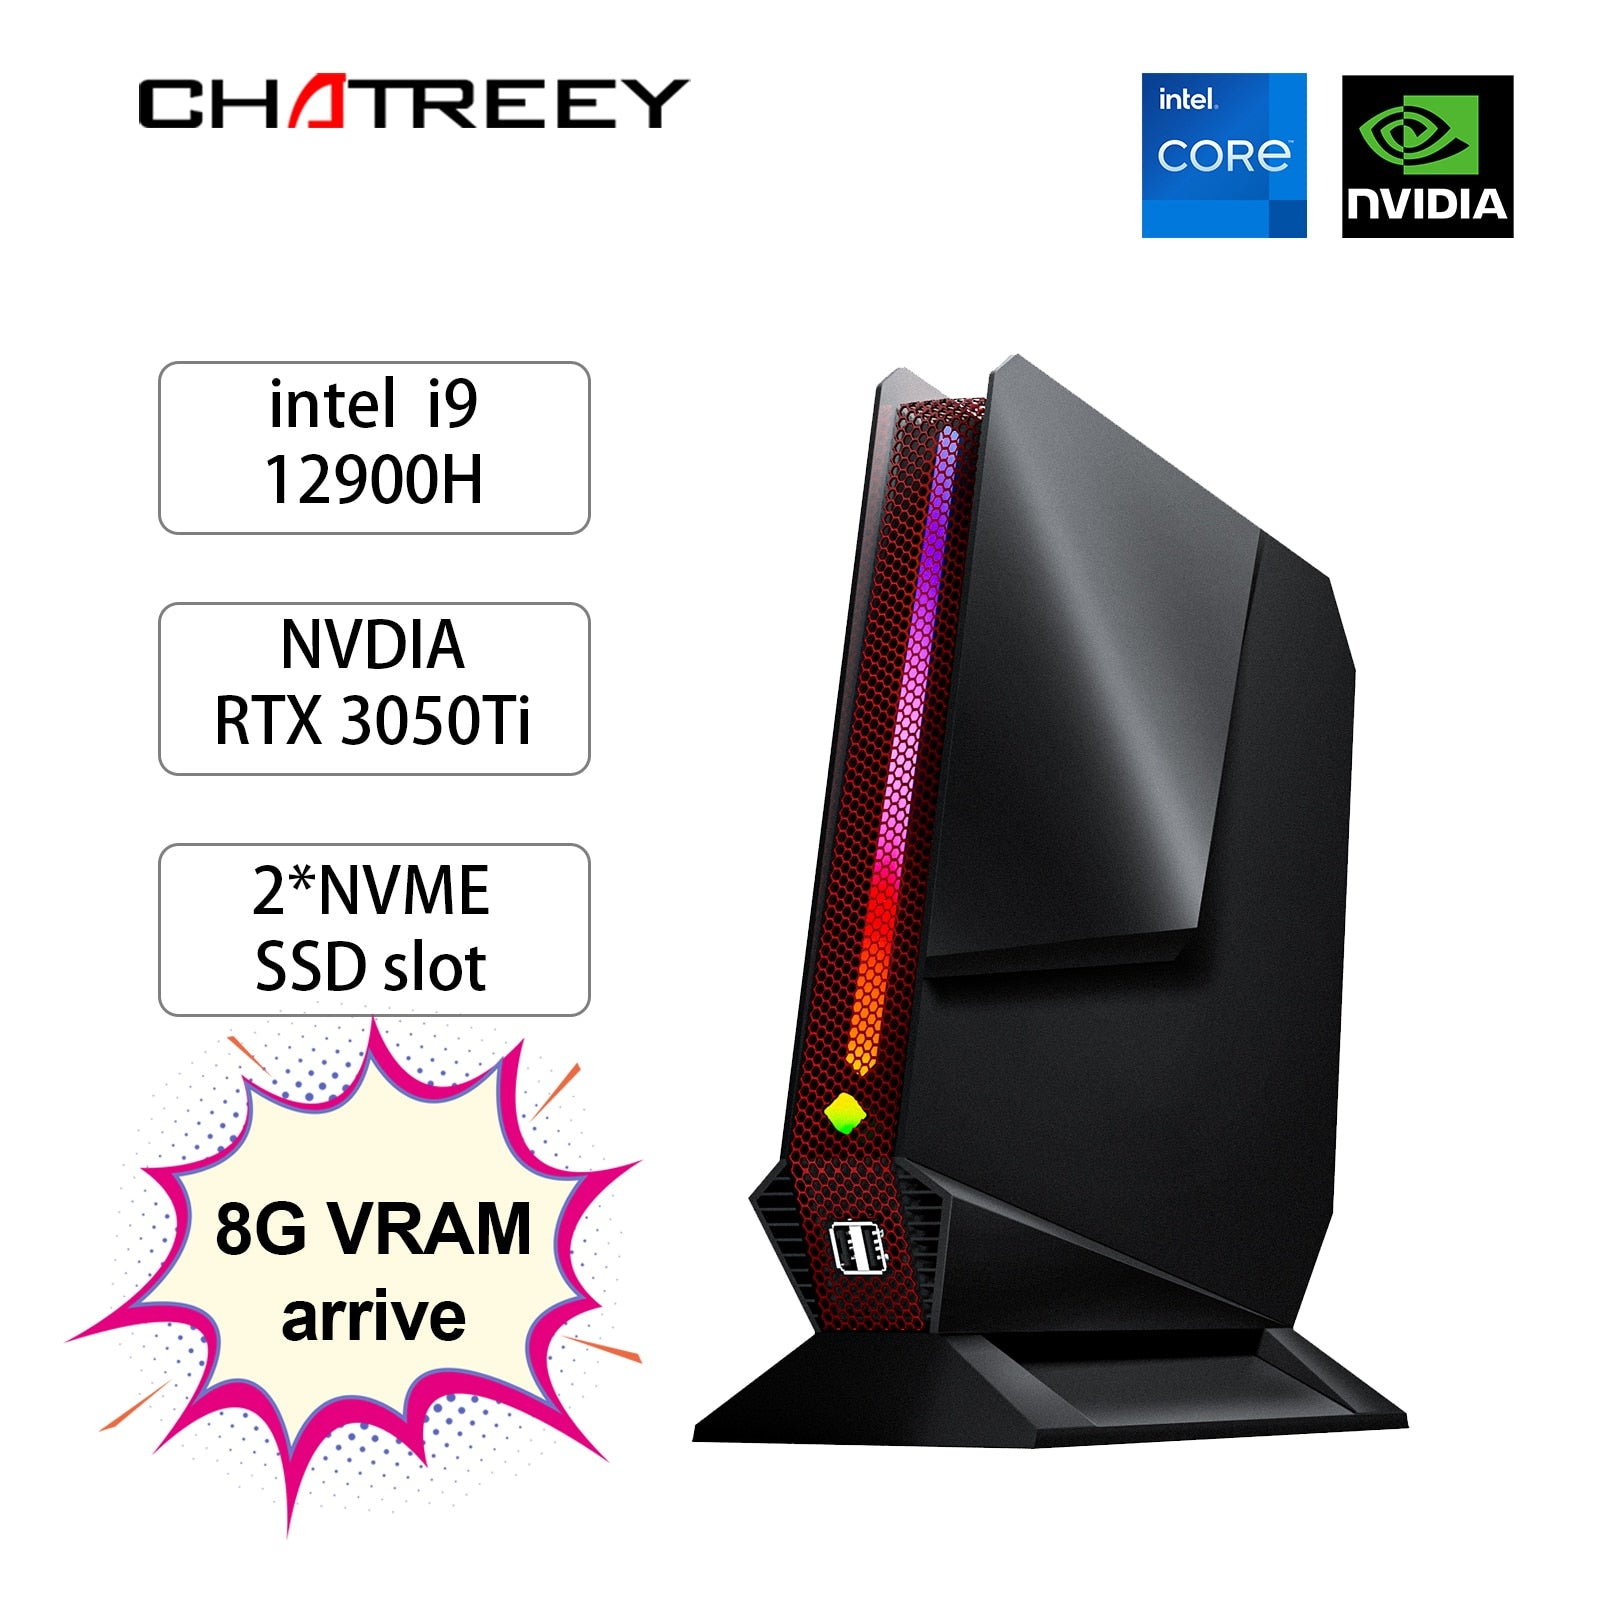 Chatreey G2 Mini PC Intel Core i9 12900H i7 12700H With Nvidia RTX3050Ti 8G Gaming Desktop Computer PCIE 4.0 Wifi 6 BT5.0